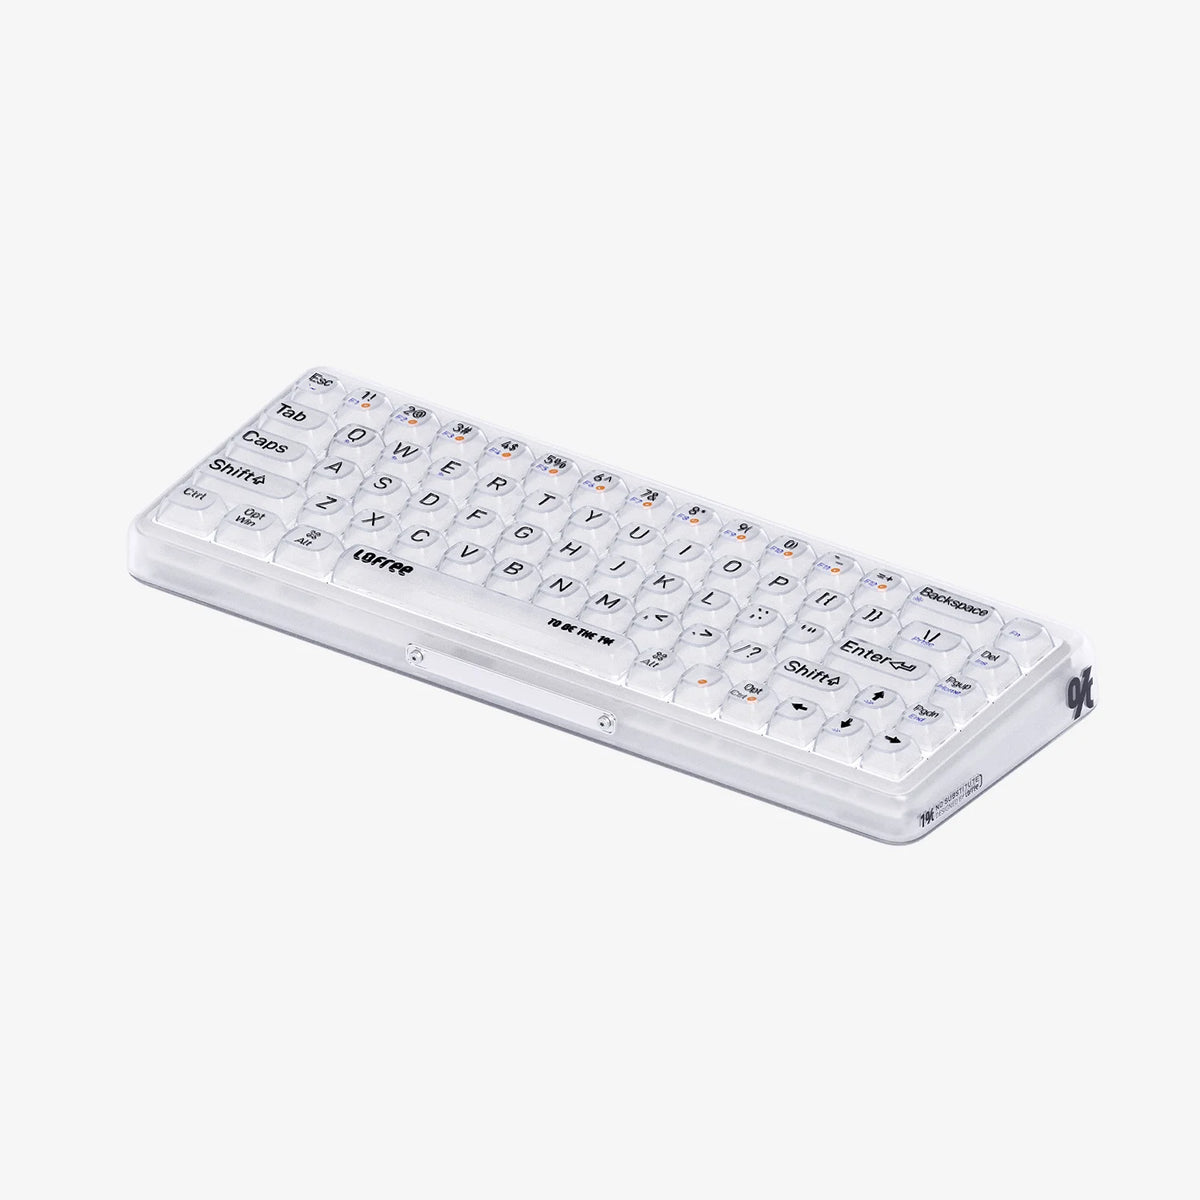 LOFREE 1% "Misty" Semi Transparent Frosted Mechanical Keyboard